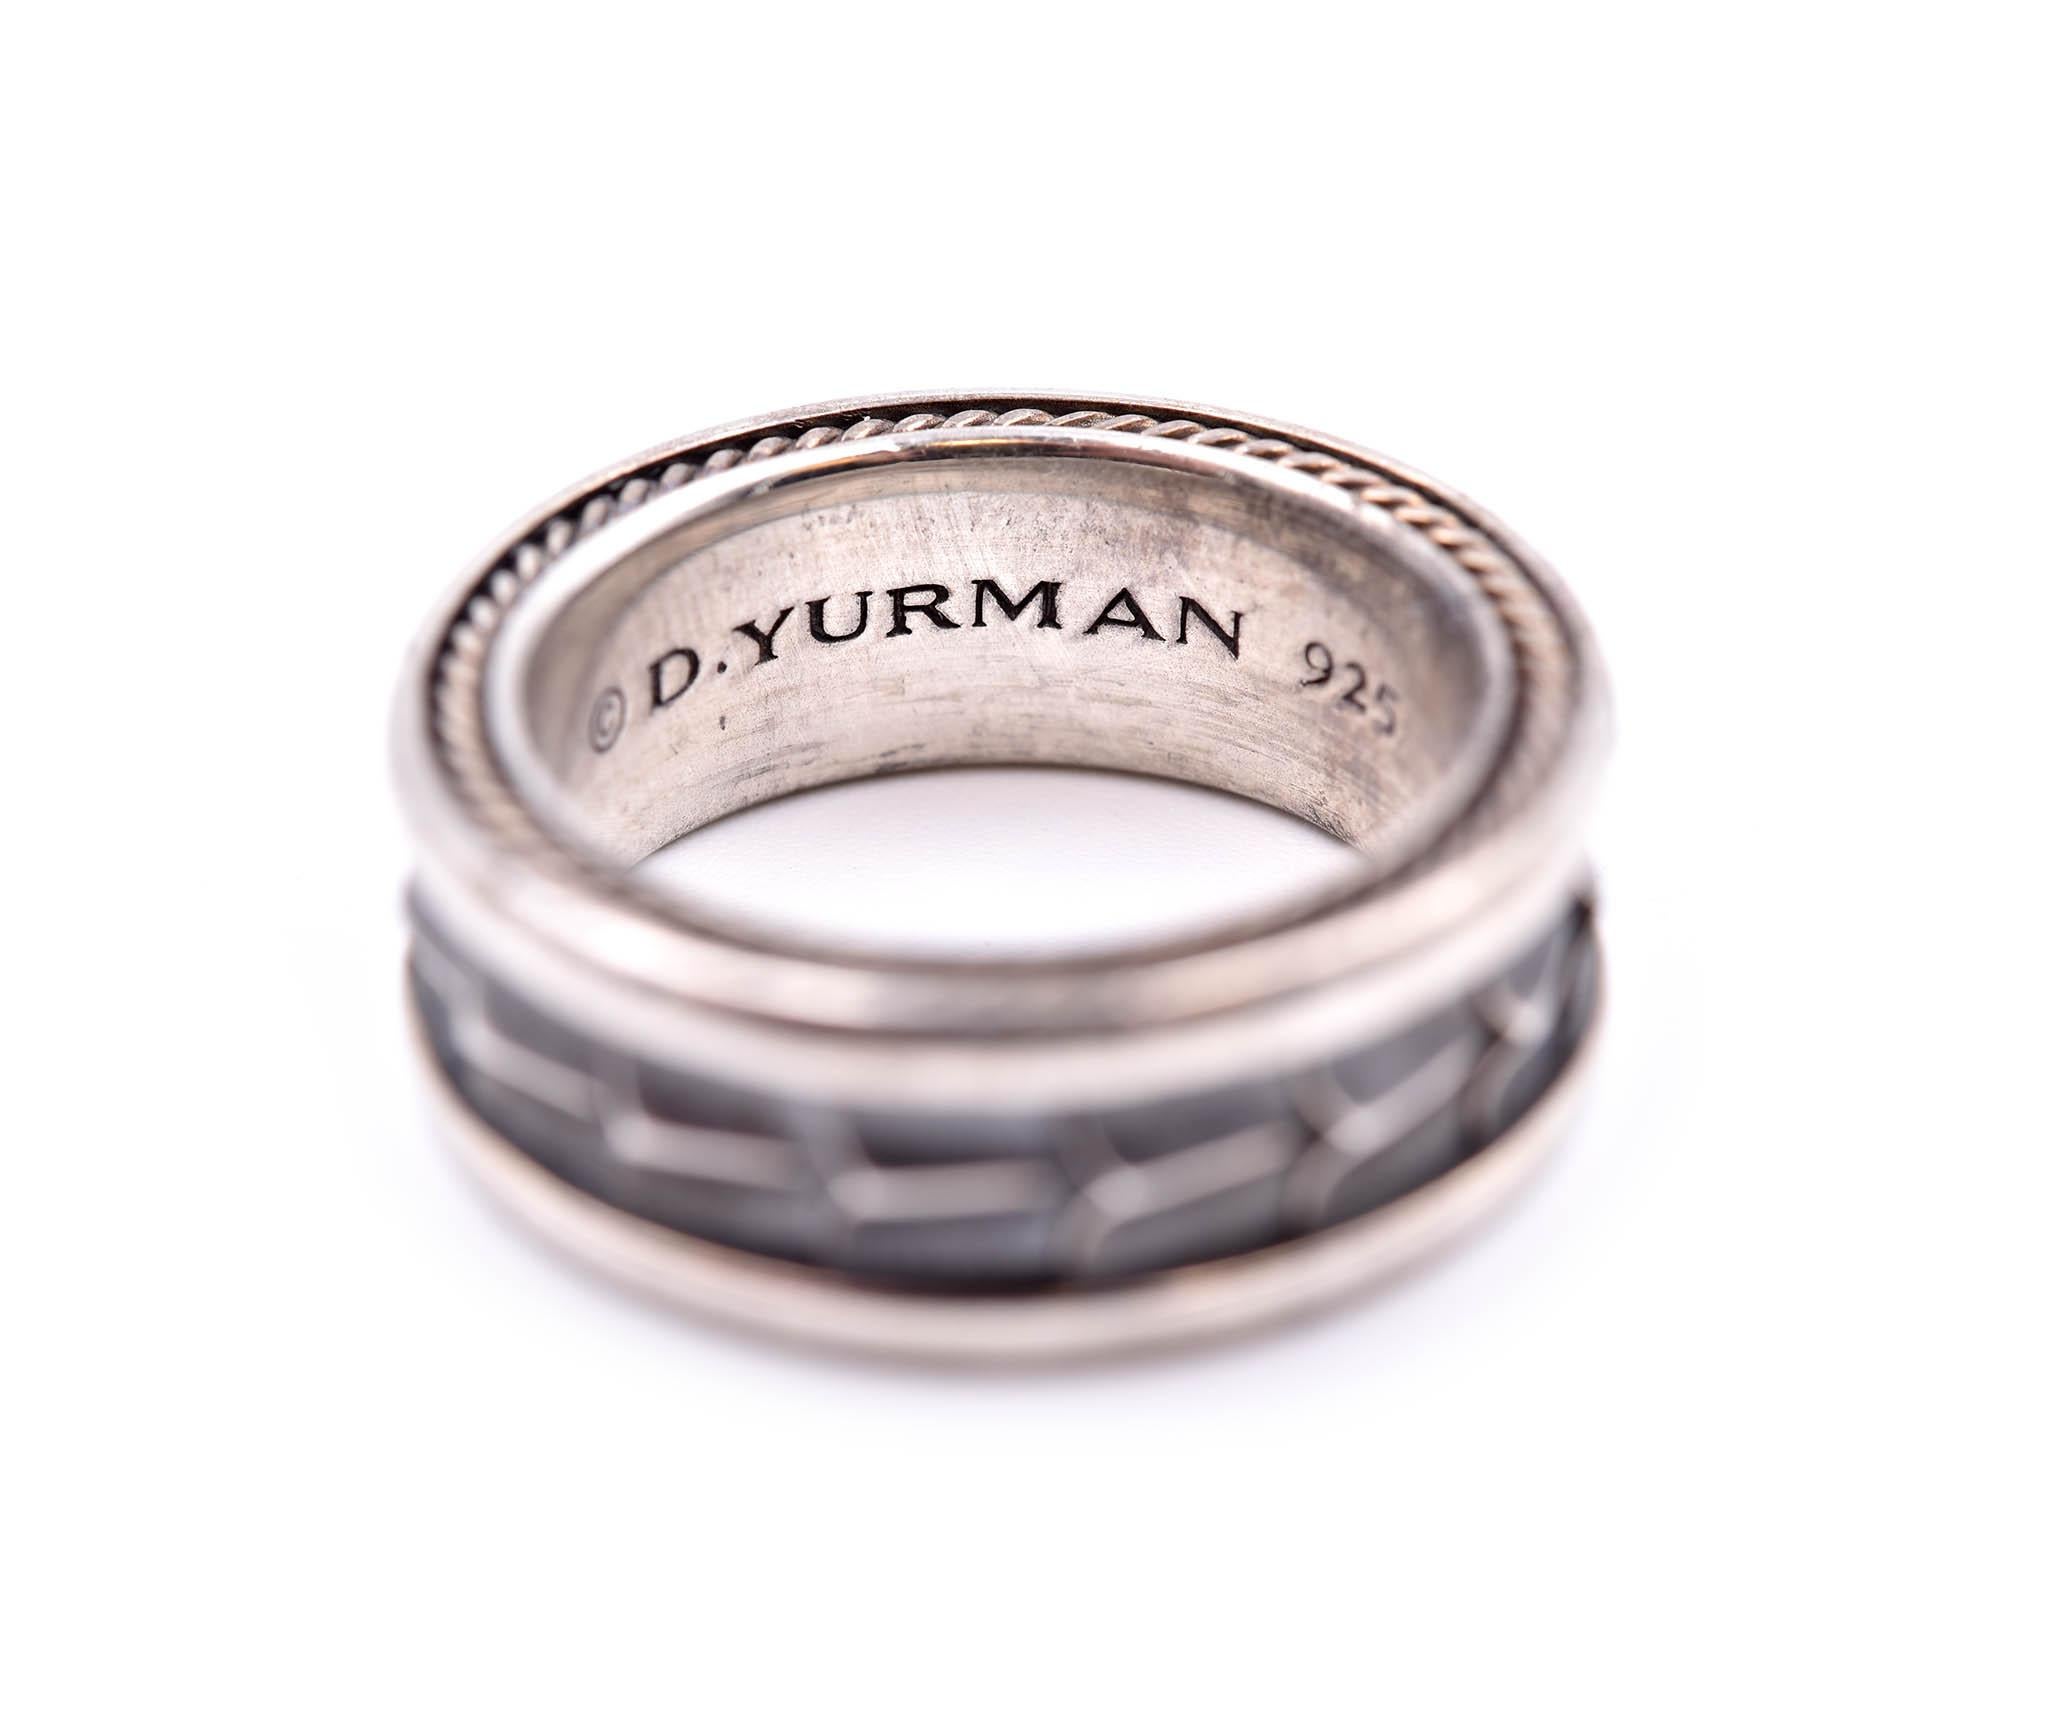 Designer: David Yurman
Material: Sterling Silver
Diameter: 8.80 mm X 25.80 mm 
Size: 9 1/2
Weight: 15.90
